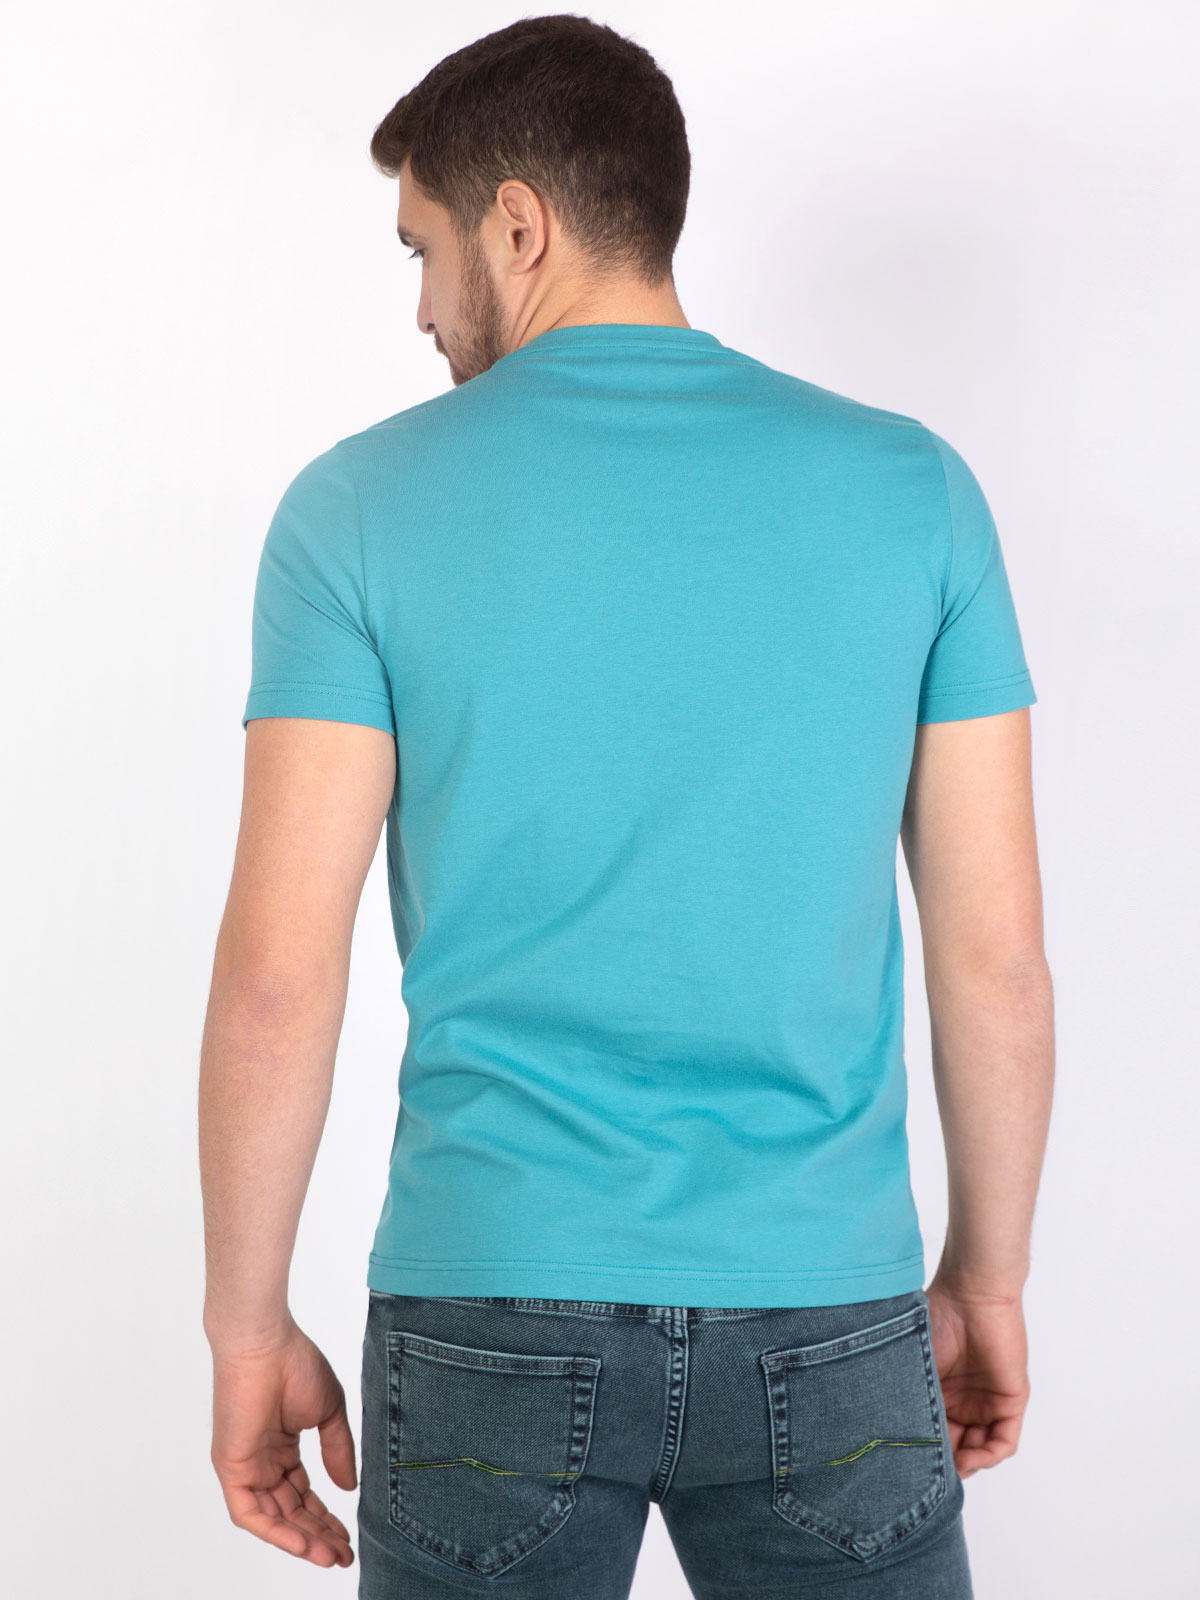 Turquoise cotton tshirt - 96382 € 11.81 img2